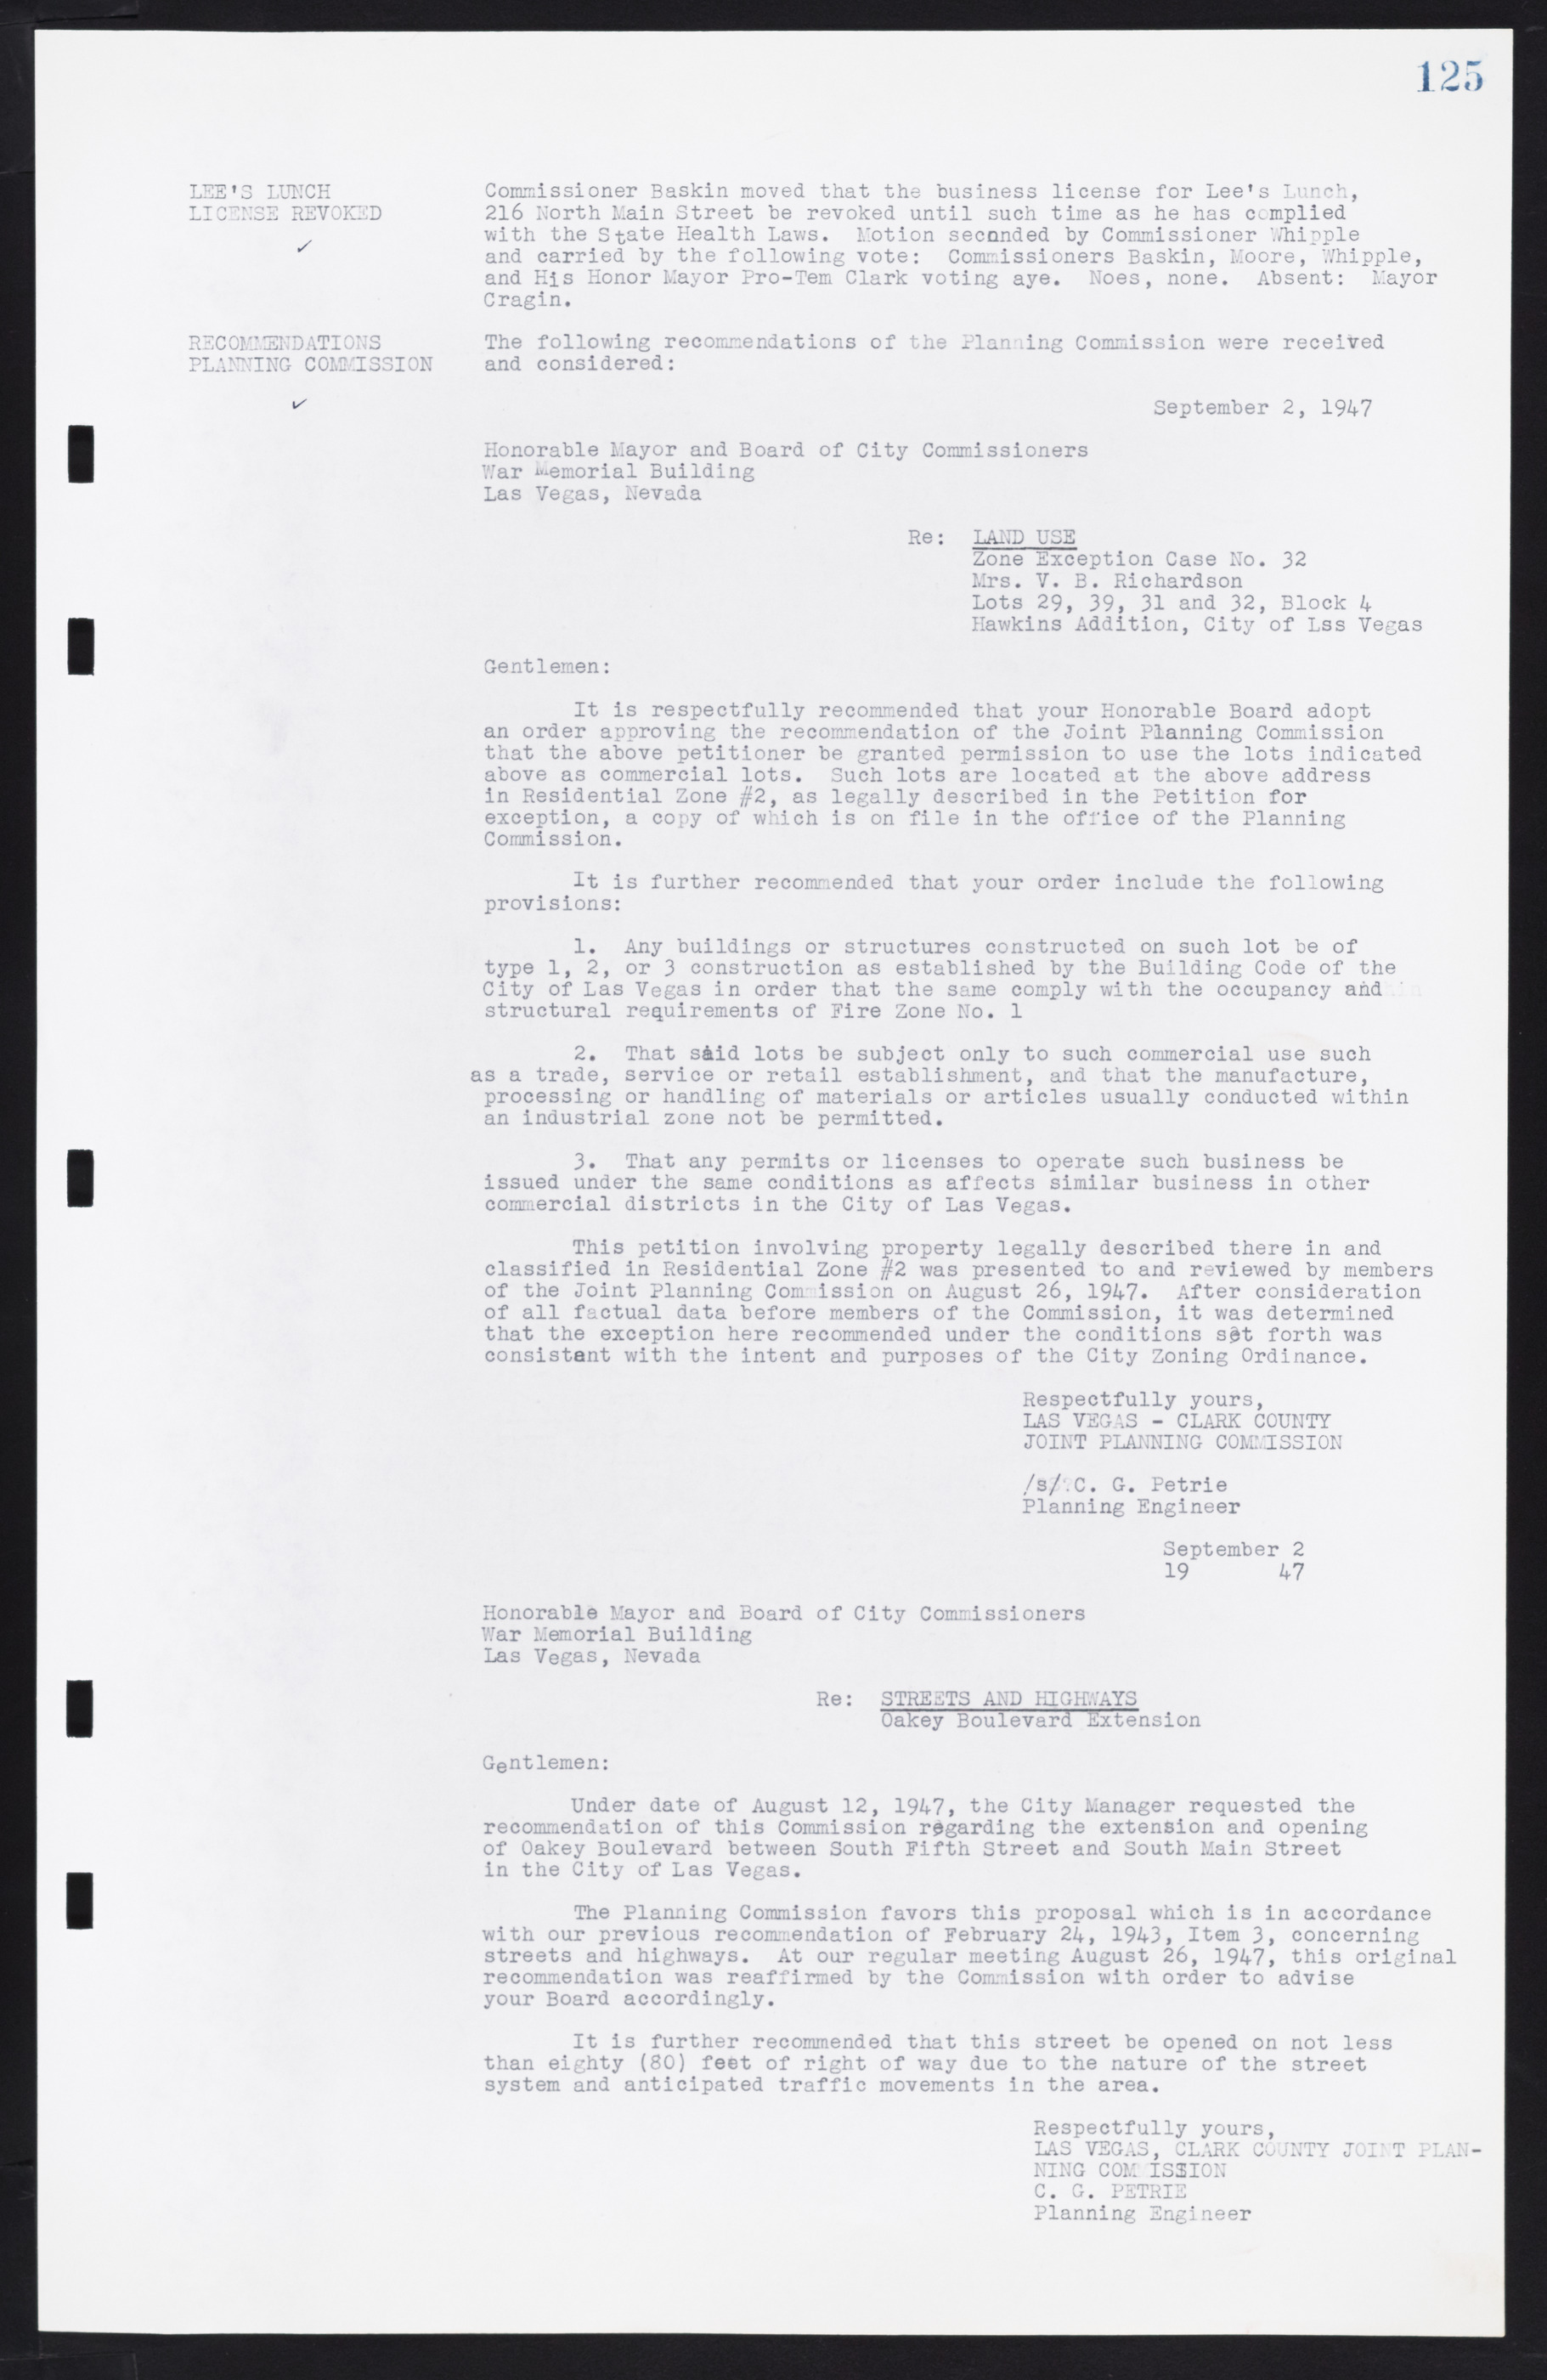 Las Vegas City Commission Minutes, January 7, 1947 to October 26, 1949, lvc000006-143